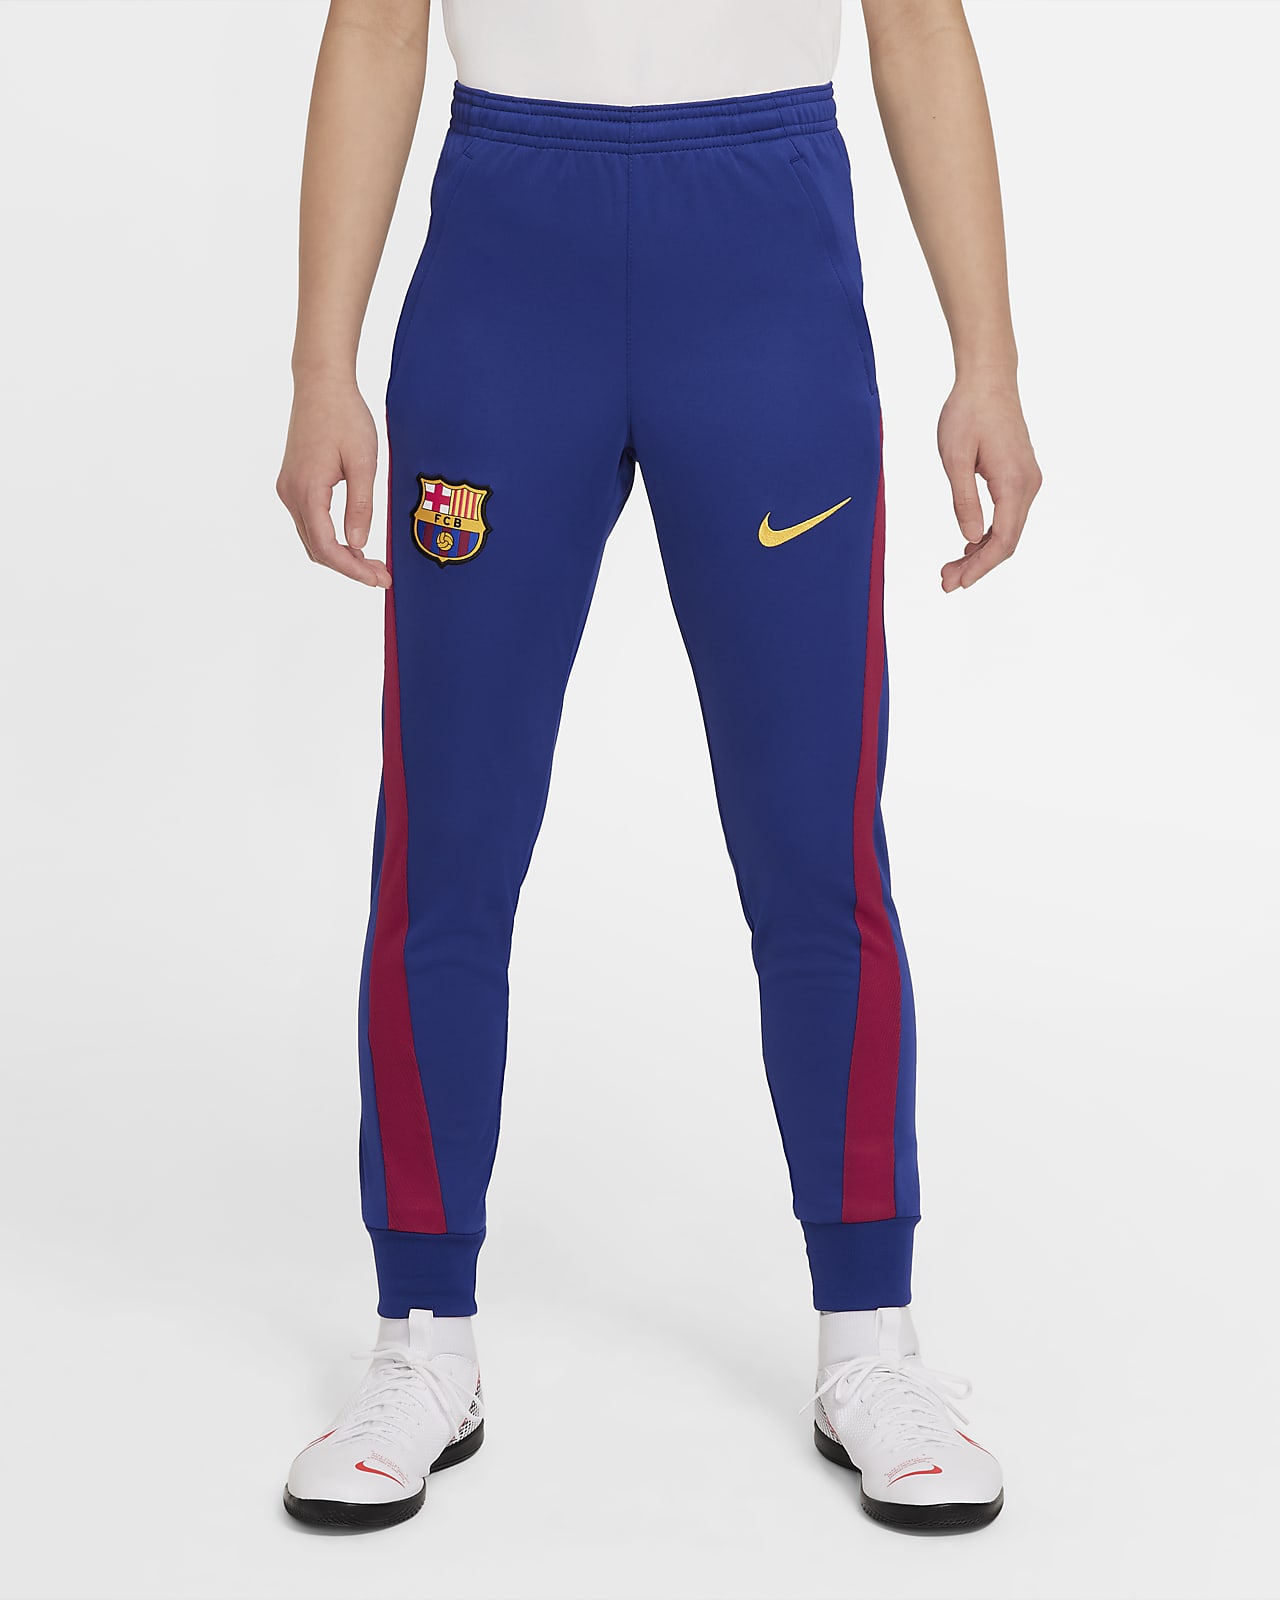 FC Barcelona Academy Pro Chándal de fútbol Dri-FIT - Niño/a. Nike ES